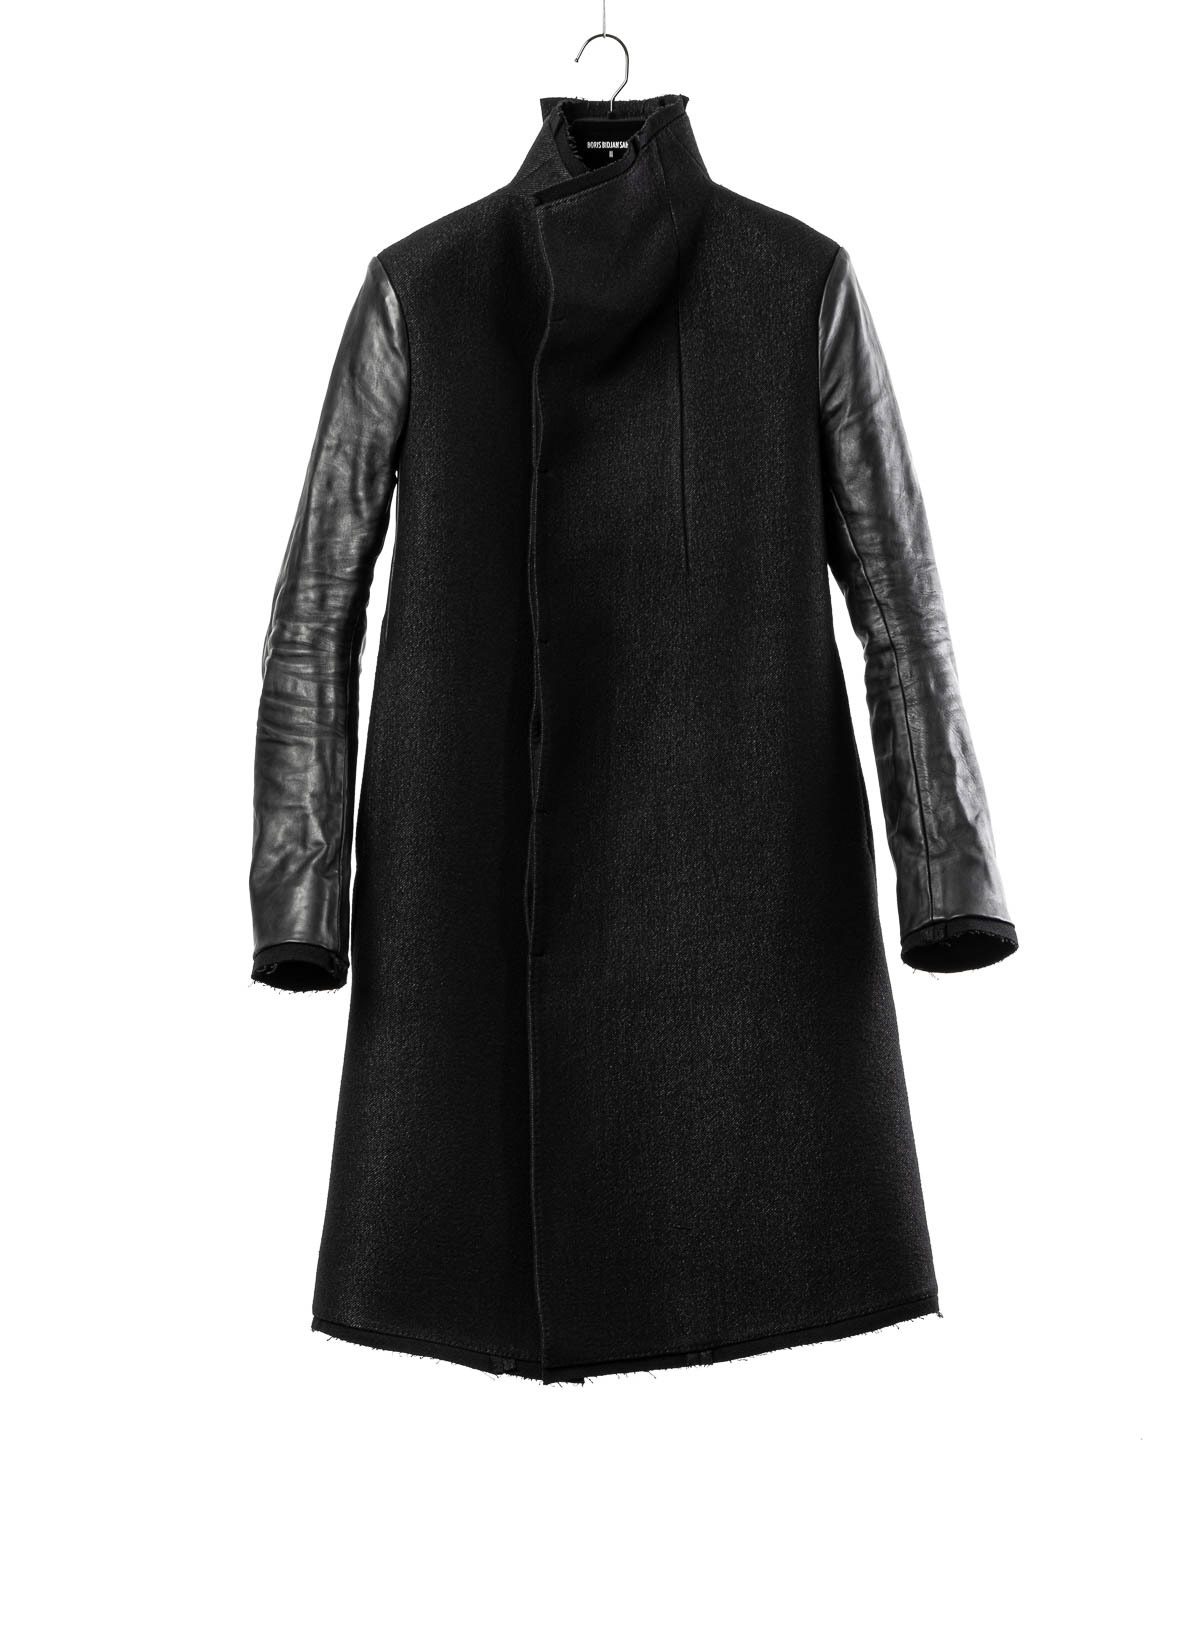 BORIS BIDJAN SABERI COAT MID, black, wool/linen + horse leather